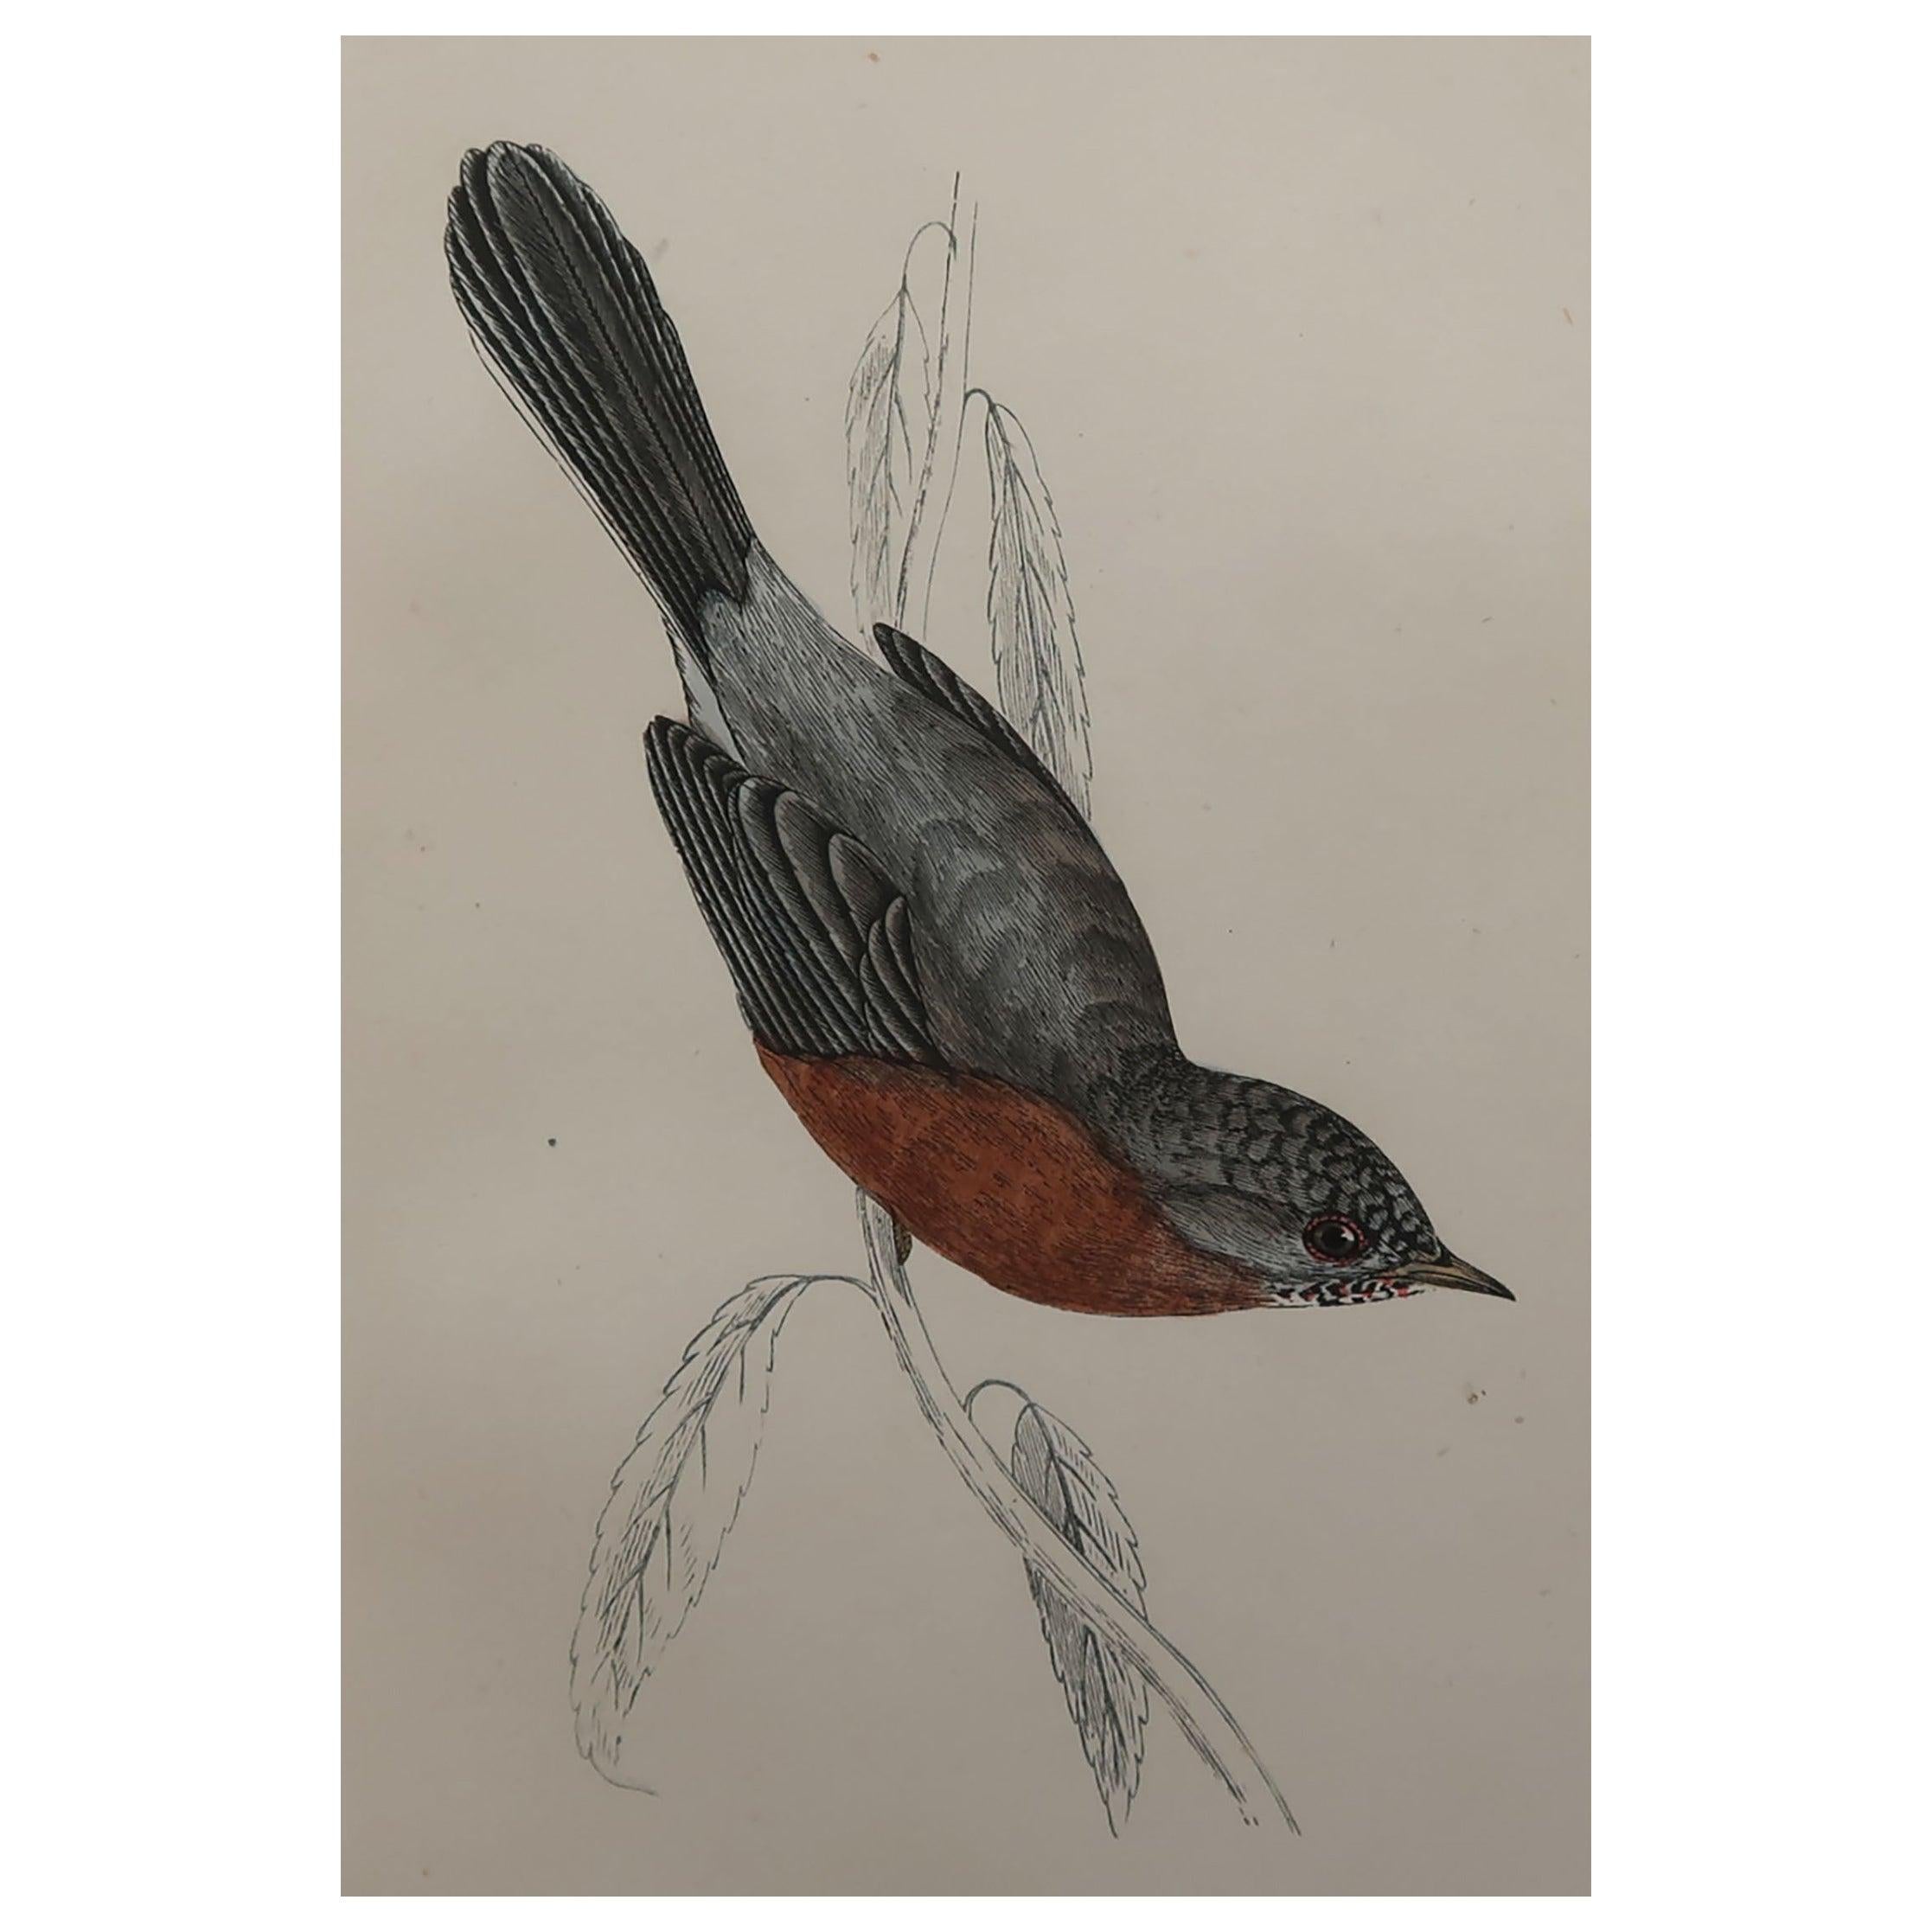 Original Antique Bird Print, the Dartford Warbler, circa 1870